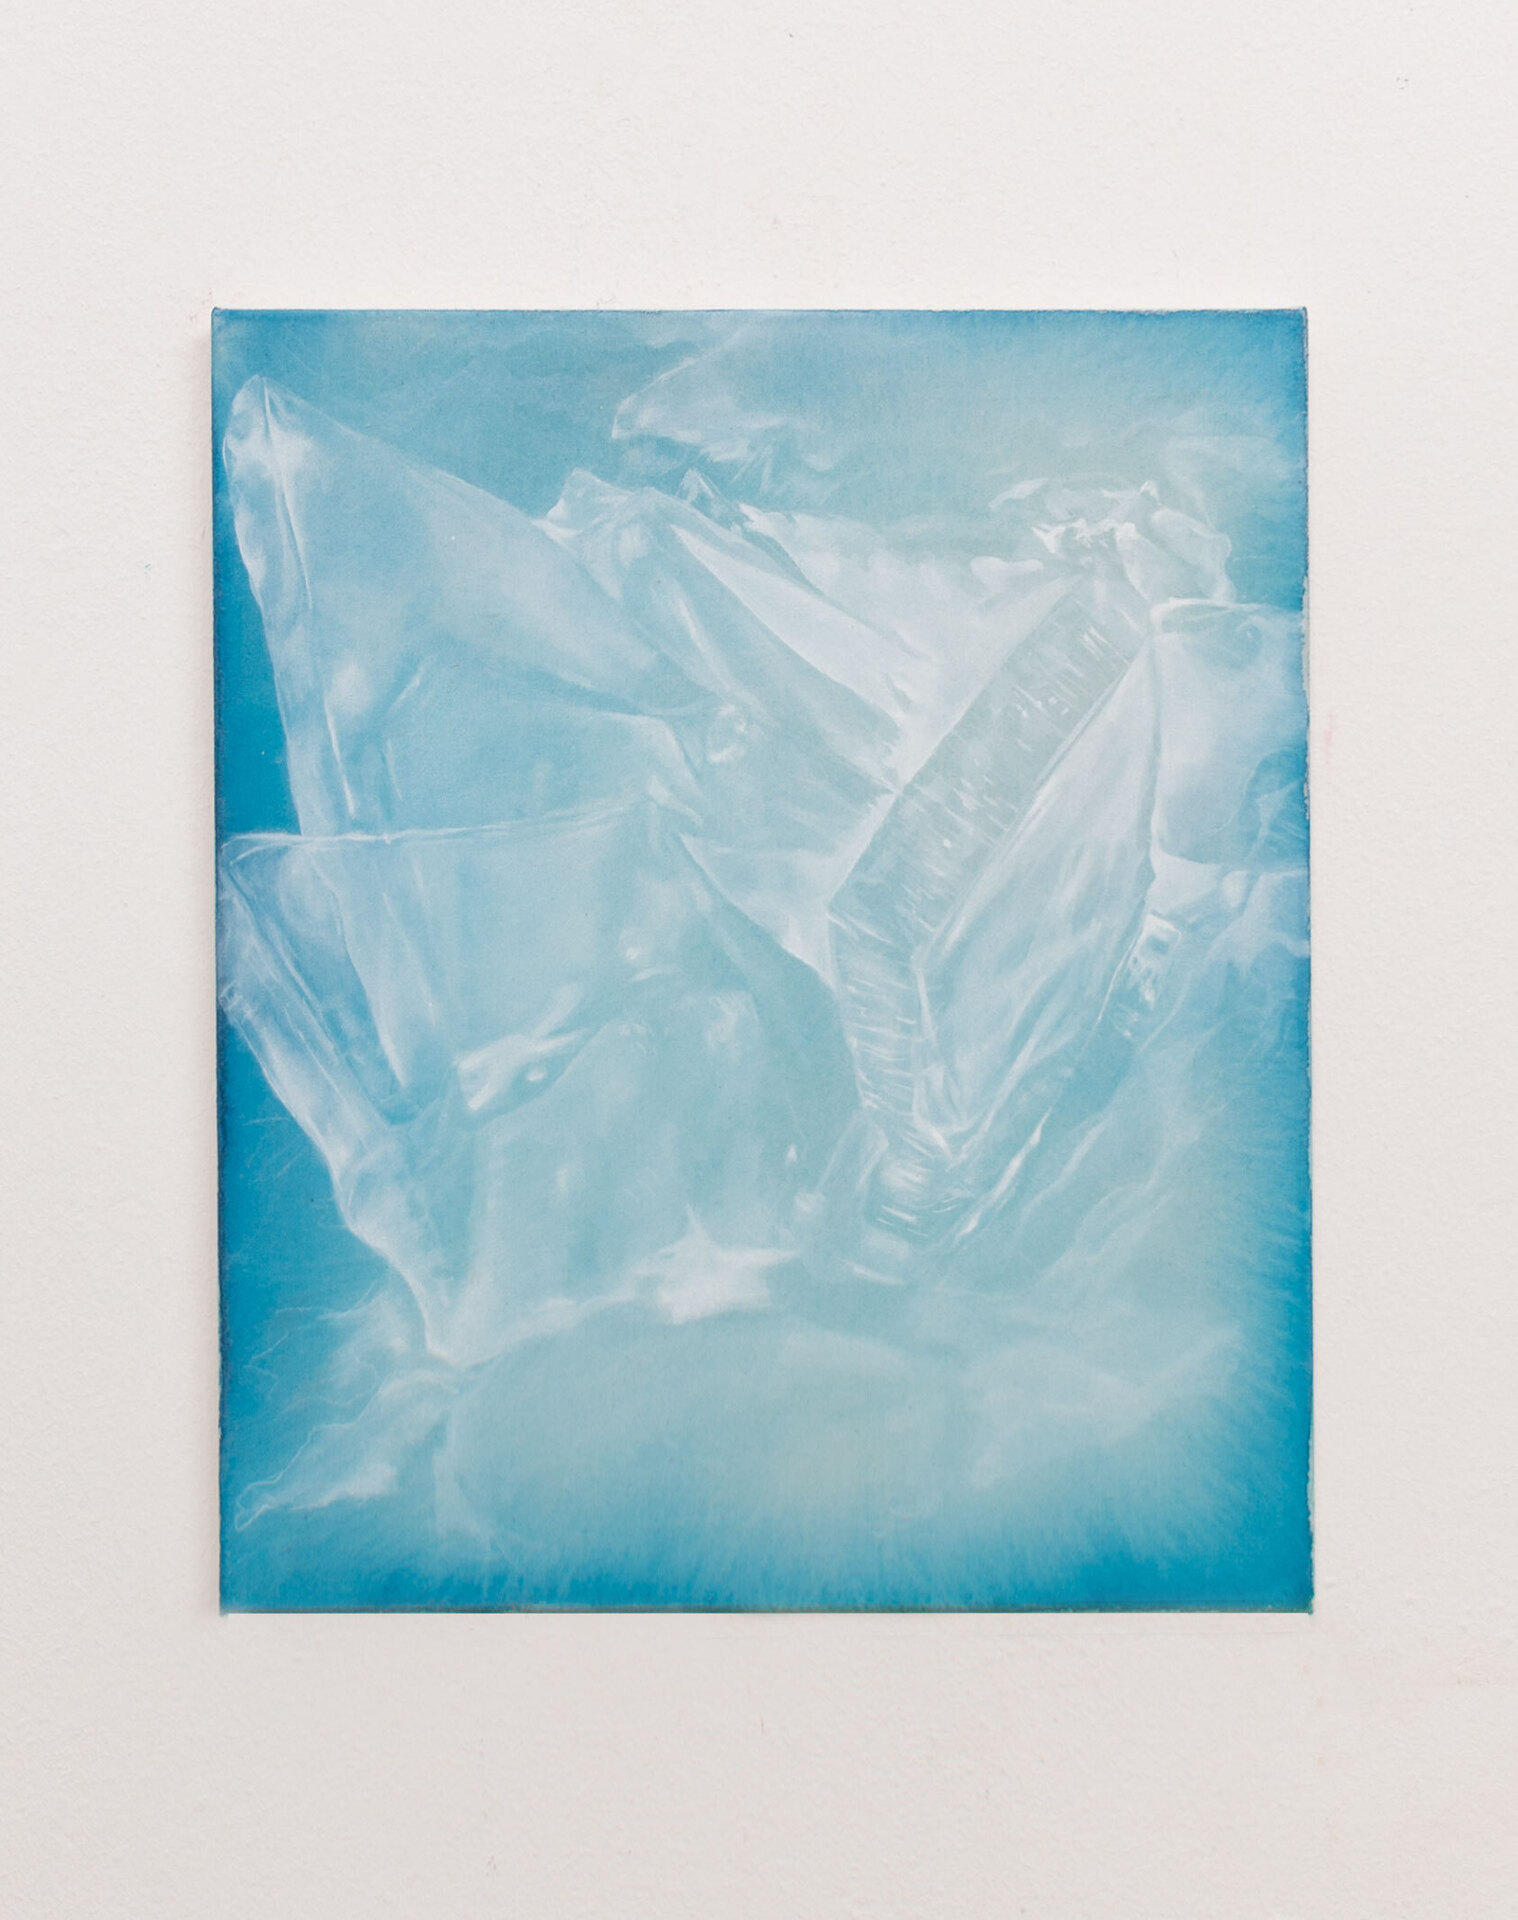 Johanna Binder, Untitled, 2020, Oil on canvas, 60 x 50 cm